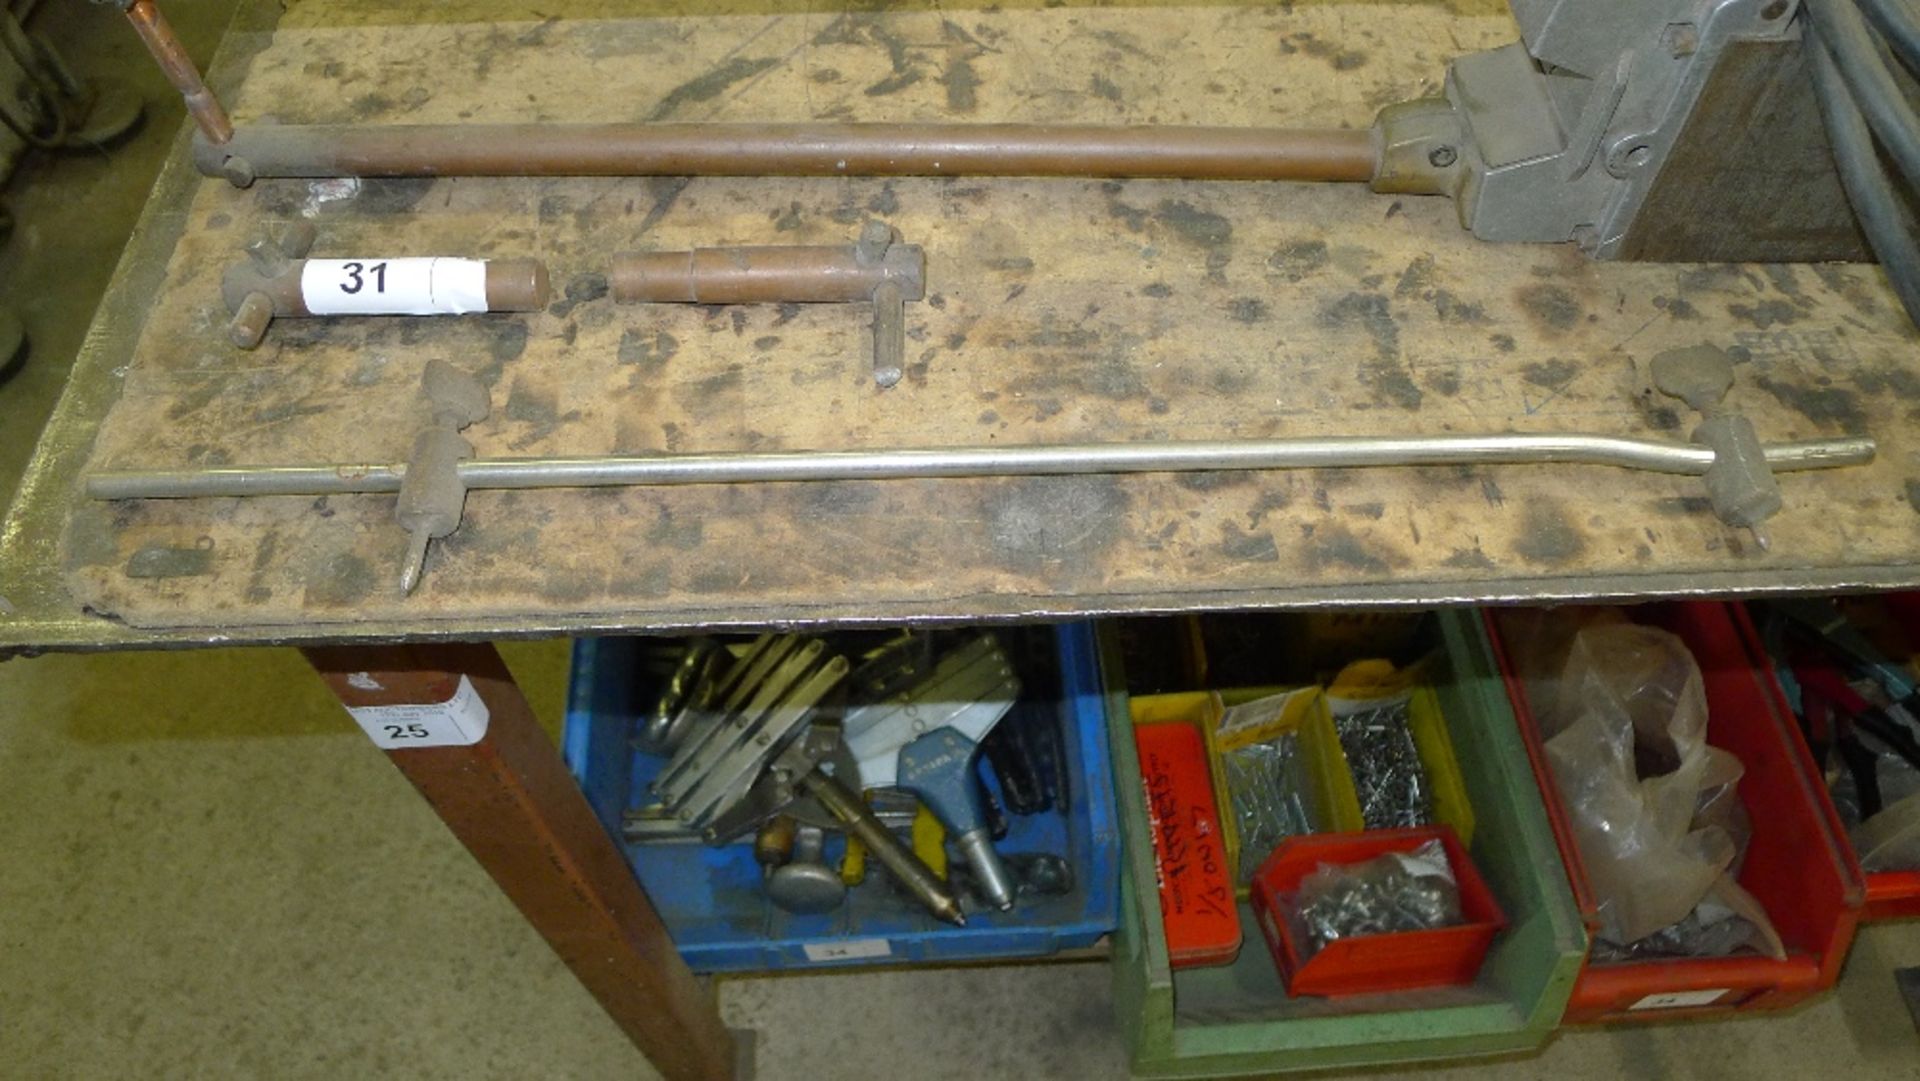 1 Cebora spot welder type Tecna T31, 240v and 1 marking tool - Image 3 of 3